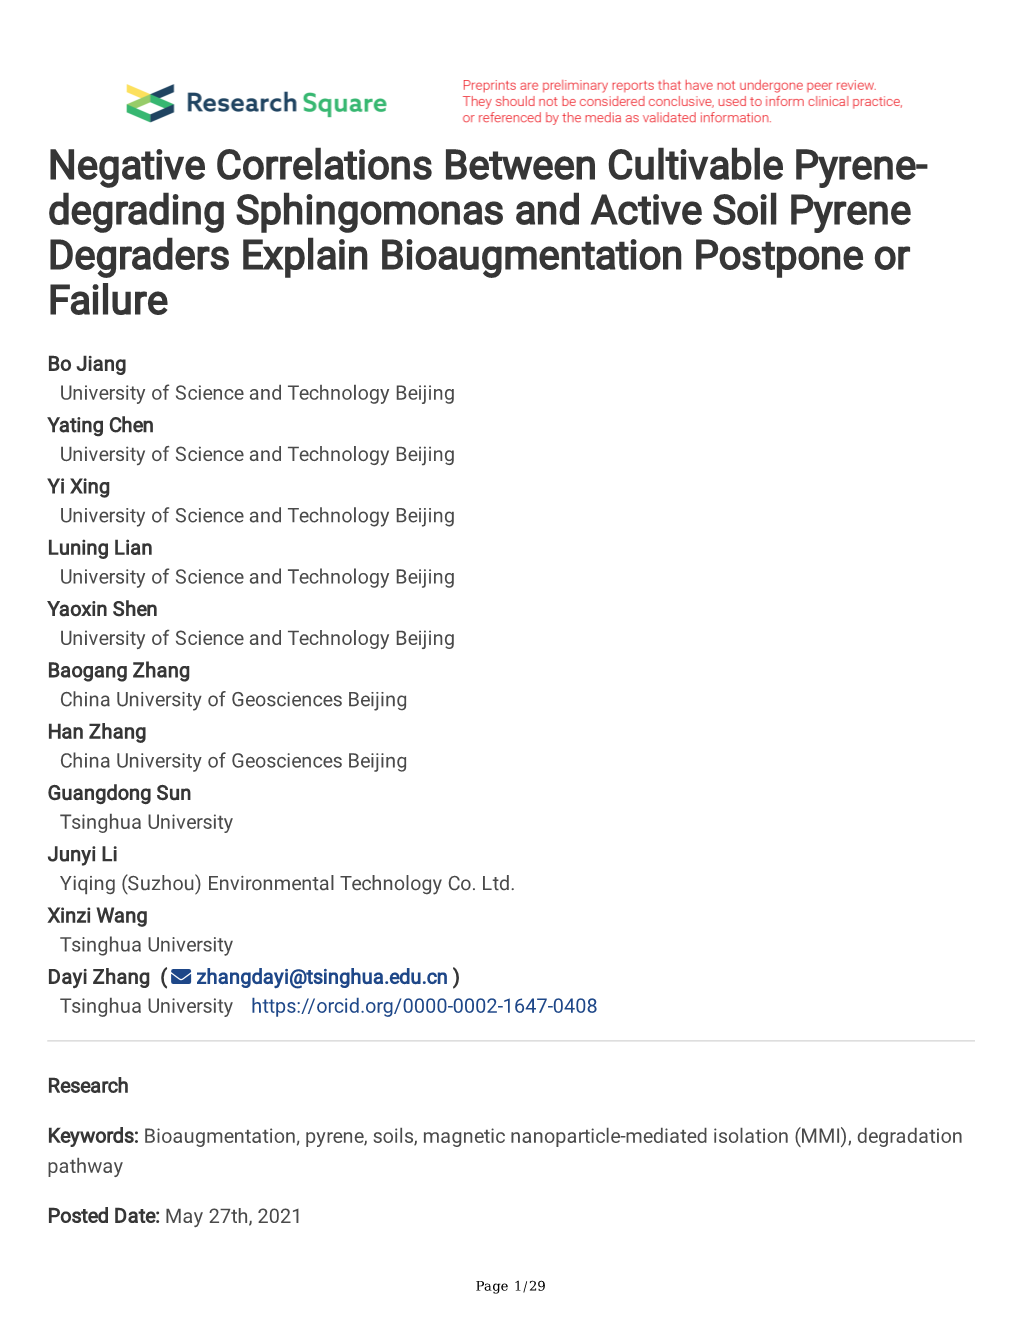 Degrading Sphingomonas and Active Soil Pyrene Degraders Explain Bioaugmentation Postpone Or Failure